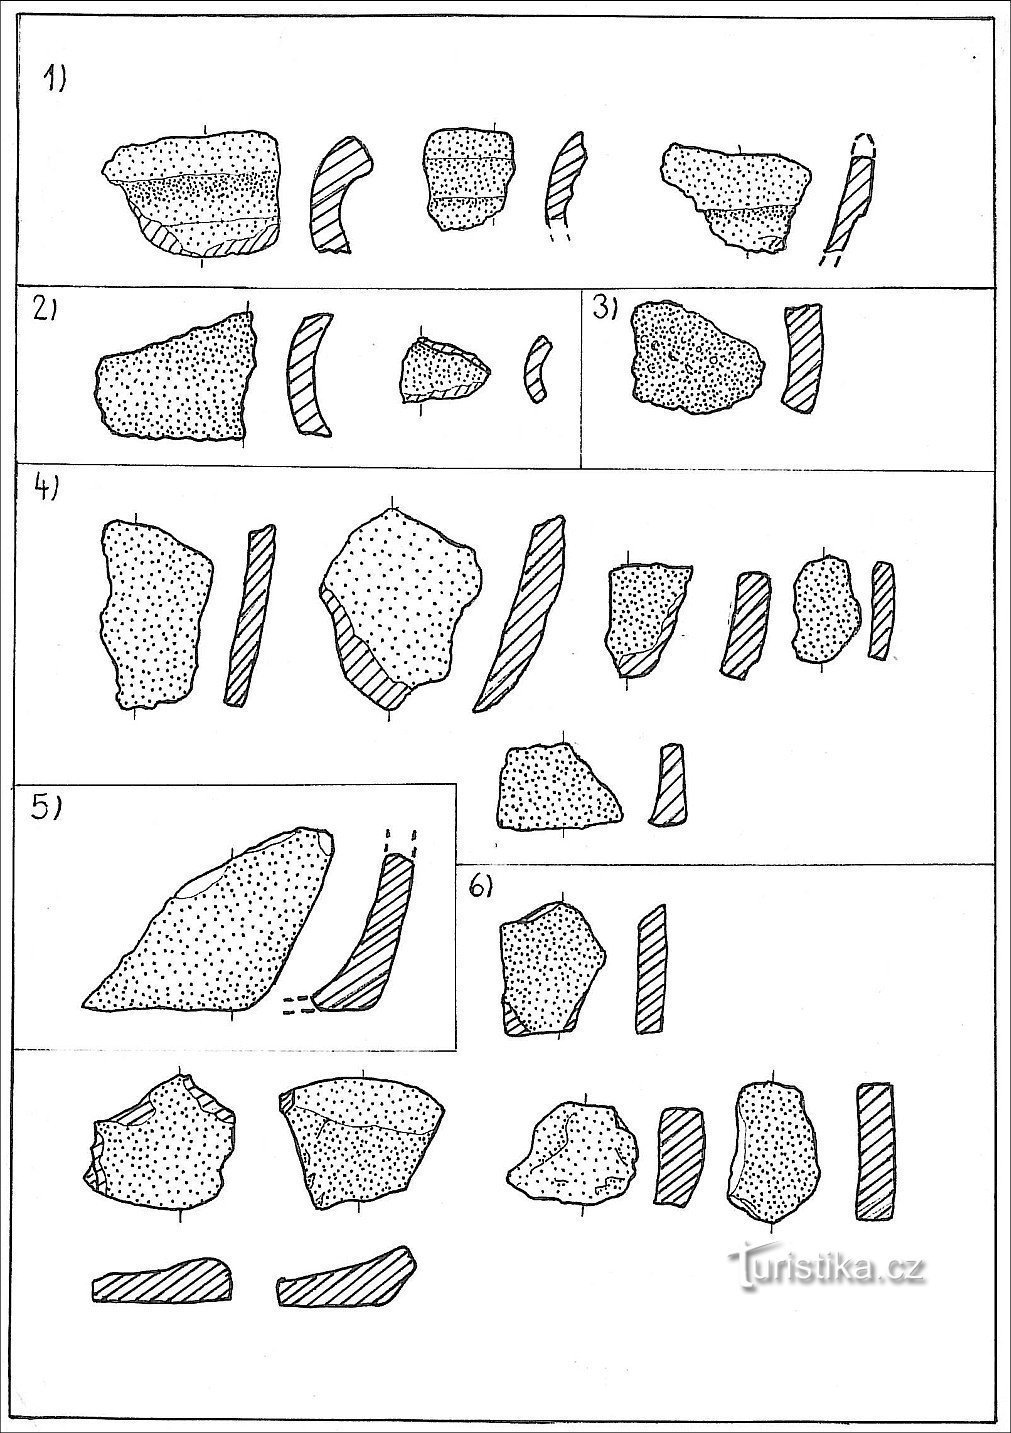 hillfort陶瓷的例子； 1) 边缘，2) 喉咙，3) 肩膀，4) 身体，5) 底部，6) 底部